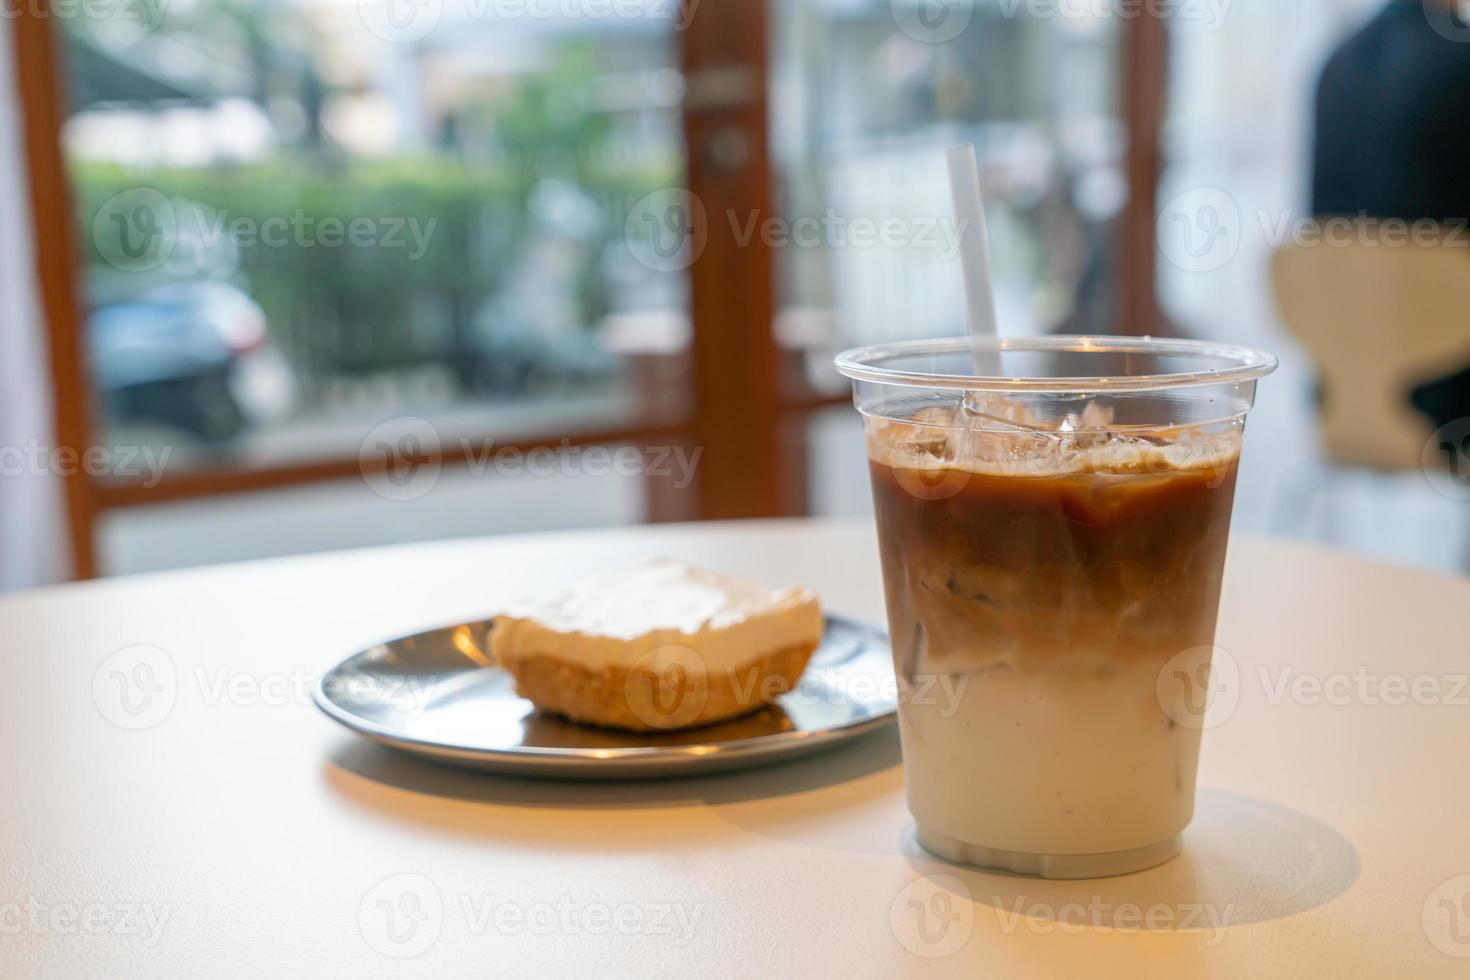 ijskoffie latte koffiekopje in café restaurant foto